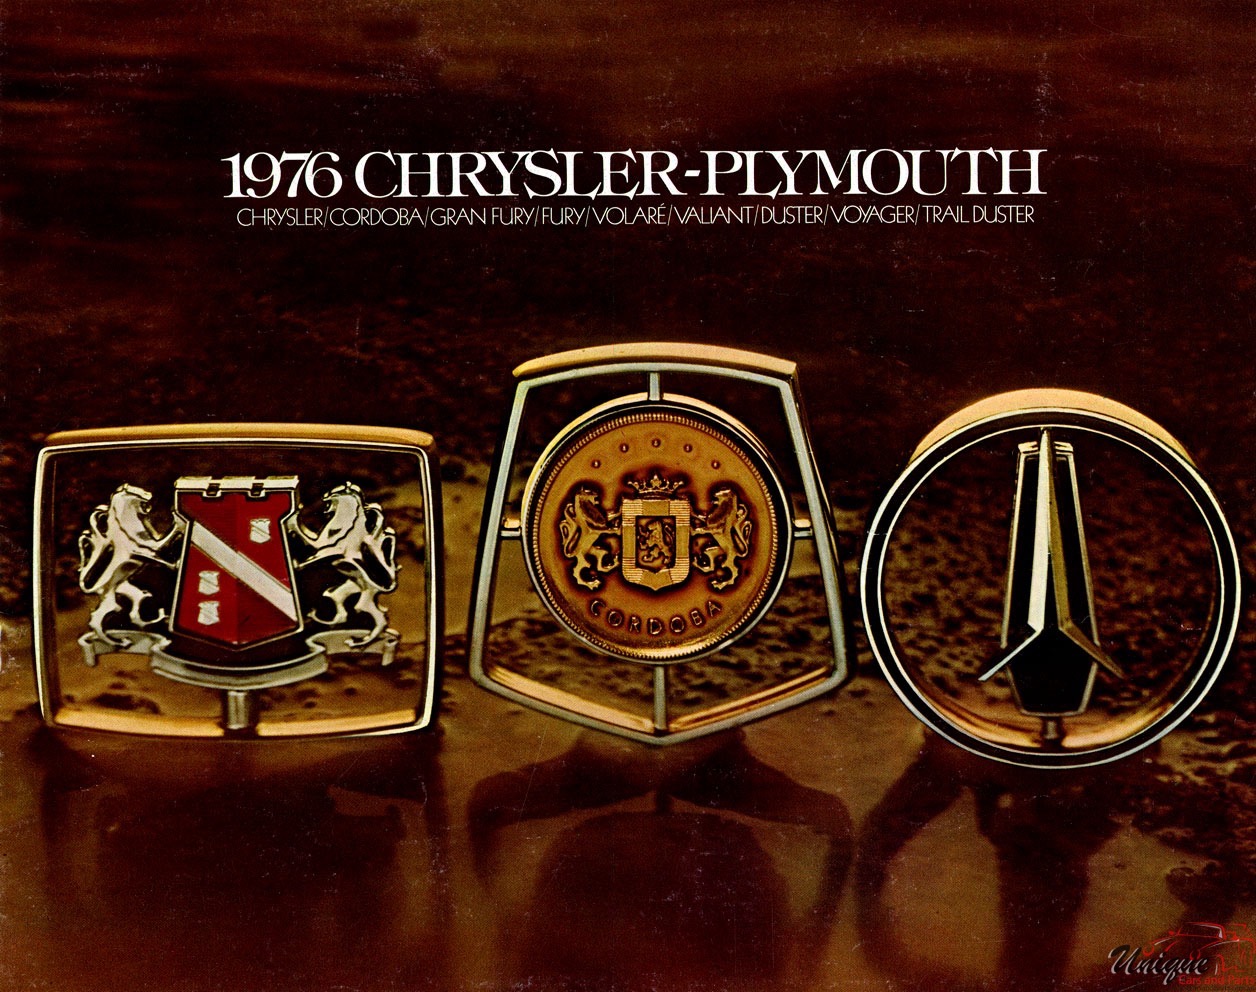 1976 Chrysler-Plymouth Brochure